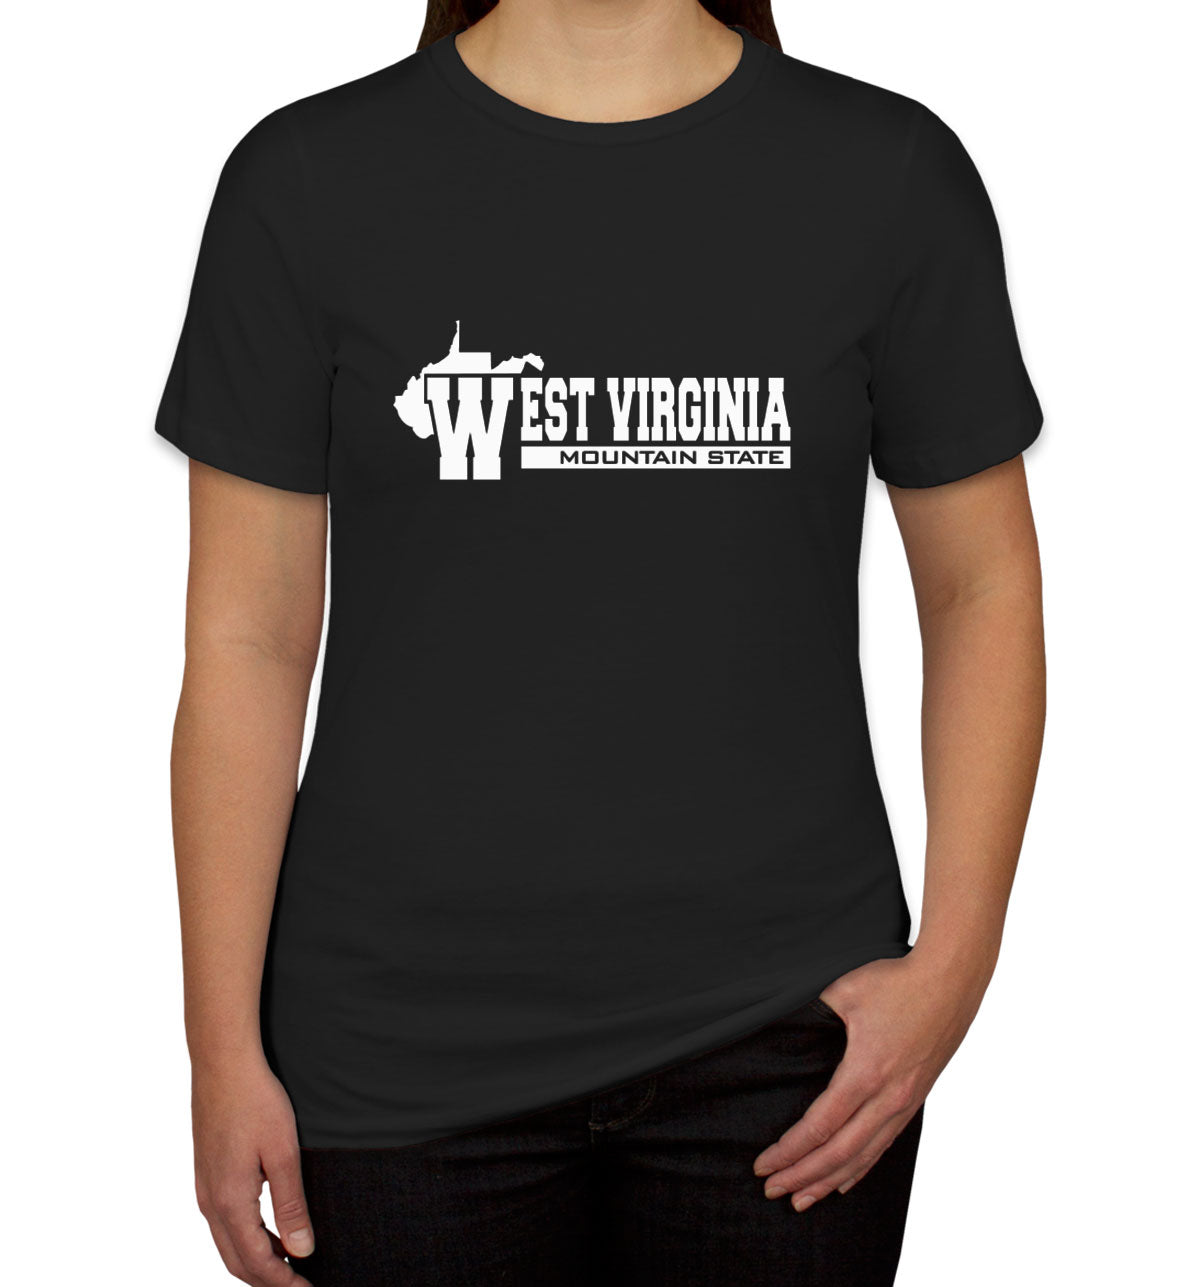 West Virginia Mountain State Women's T-shirt